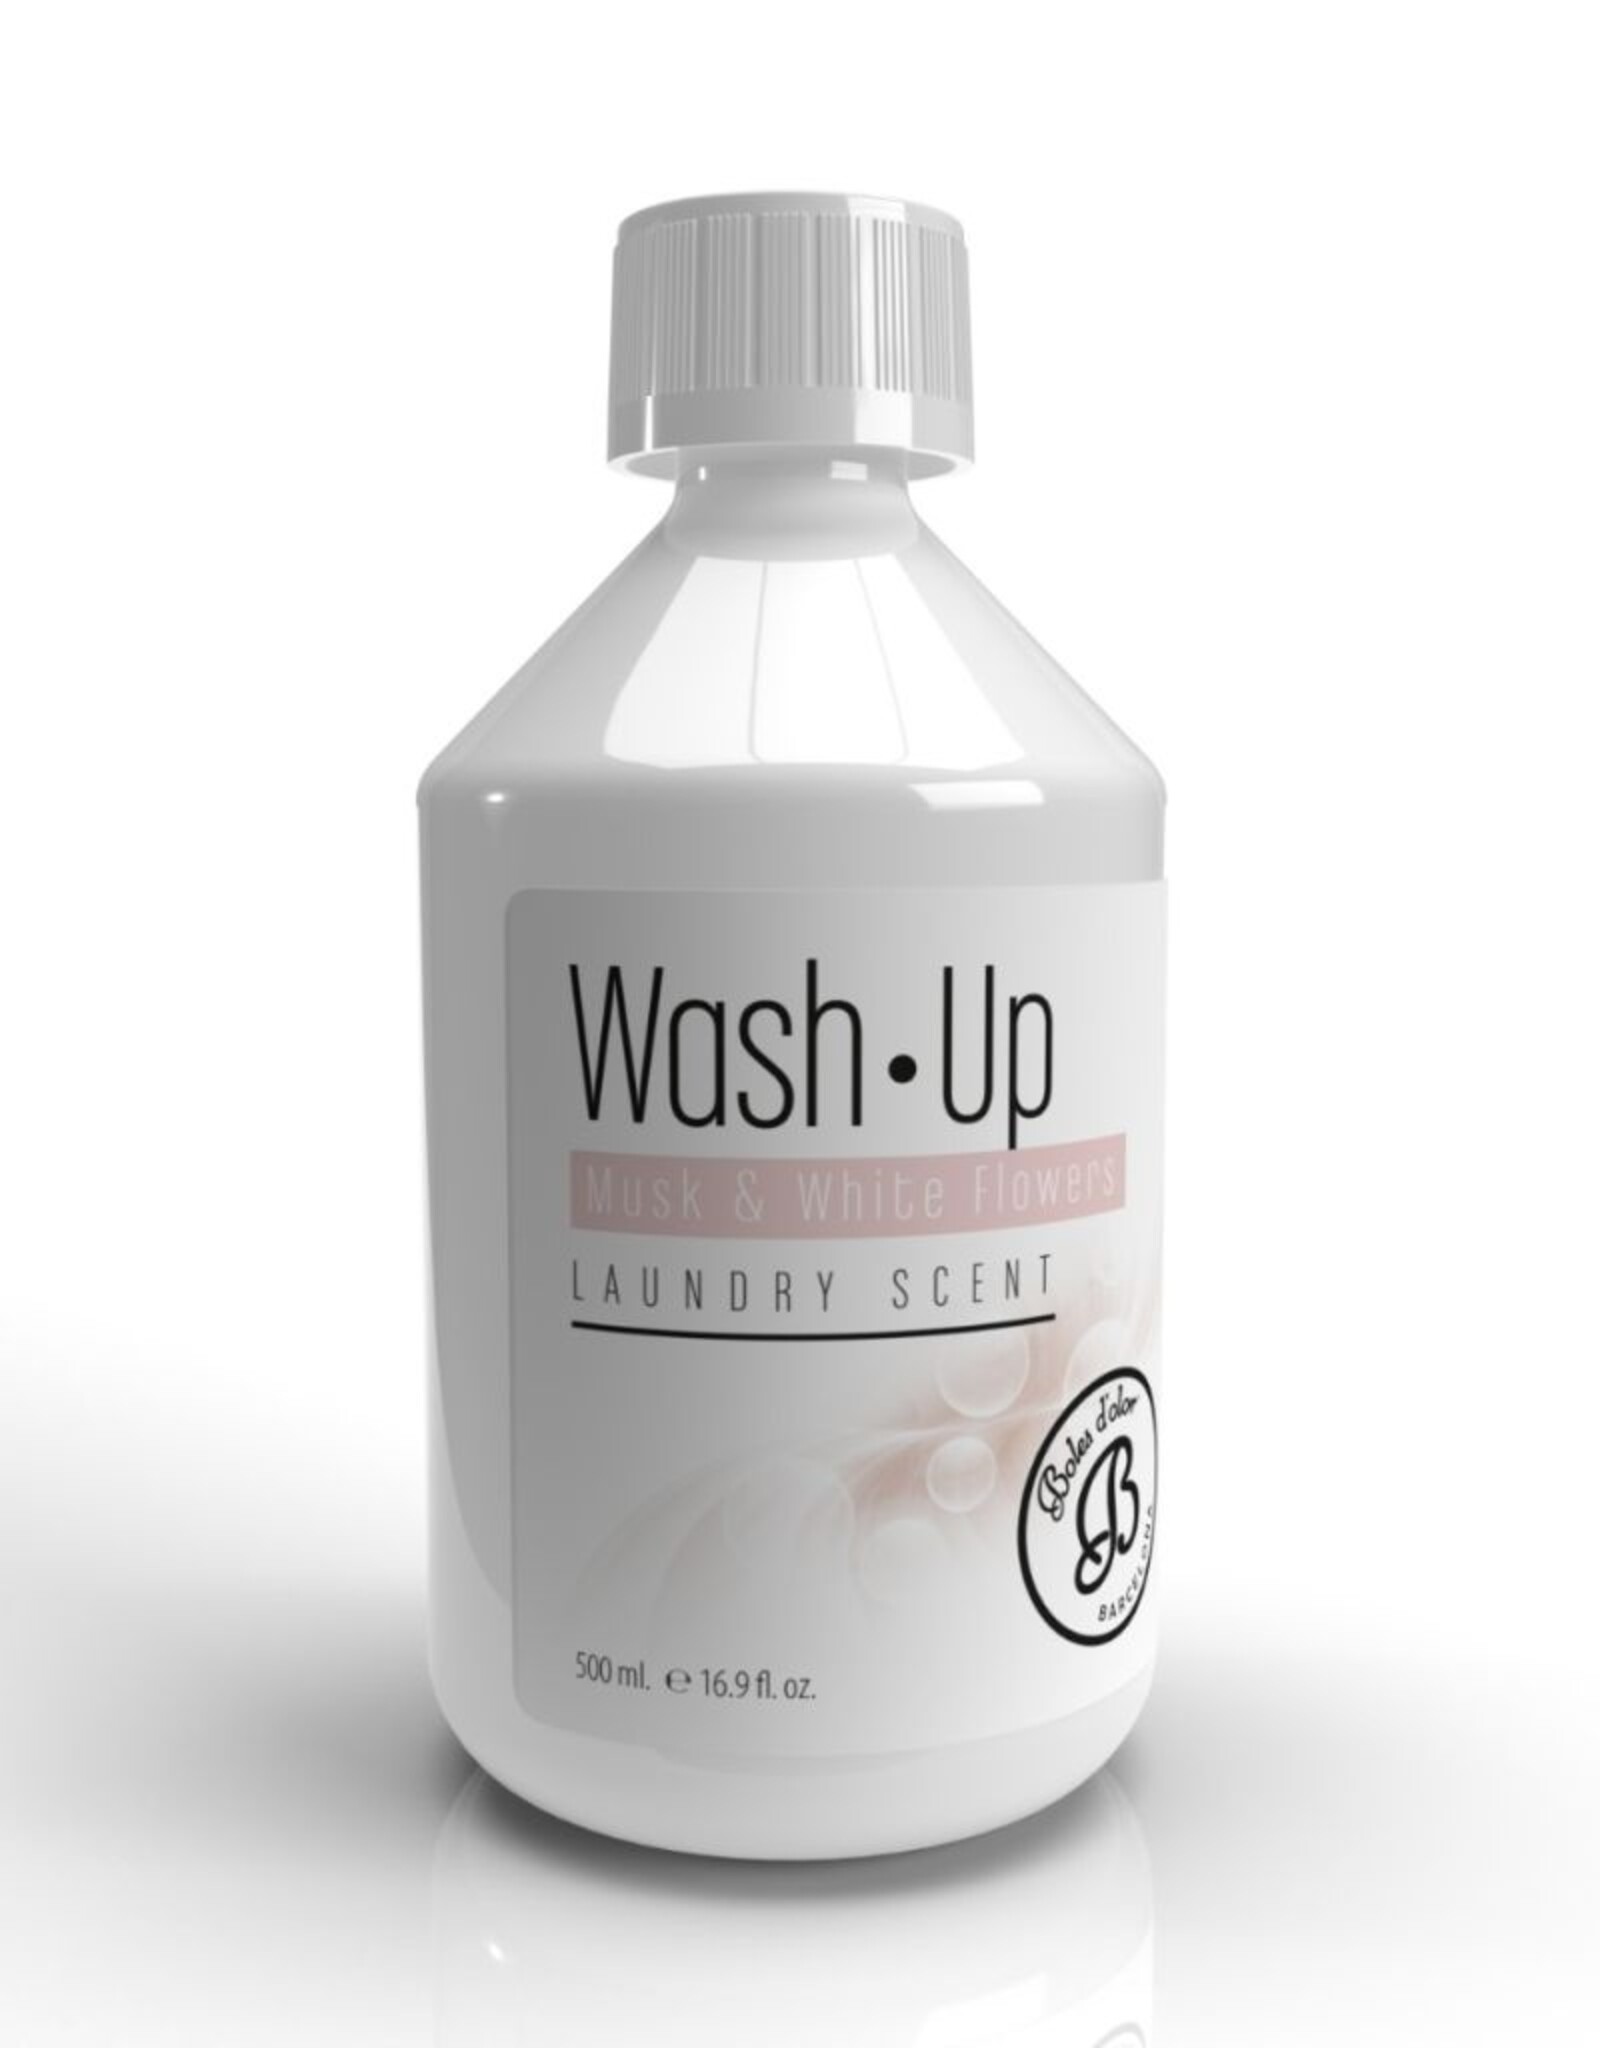 Wash Up Wasparfum 'Wash Up' Musk & White Flowers